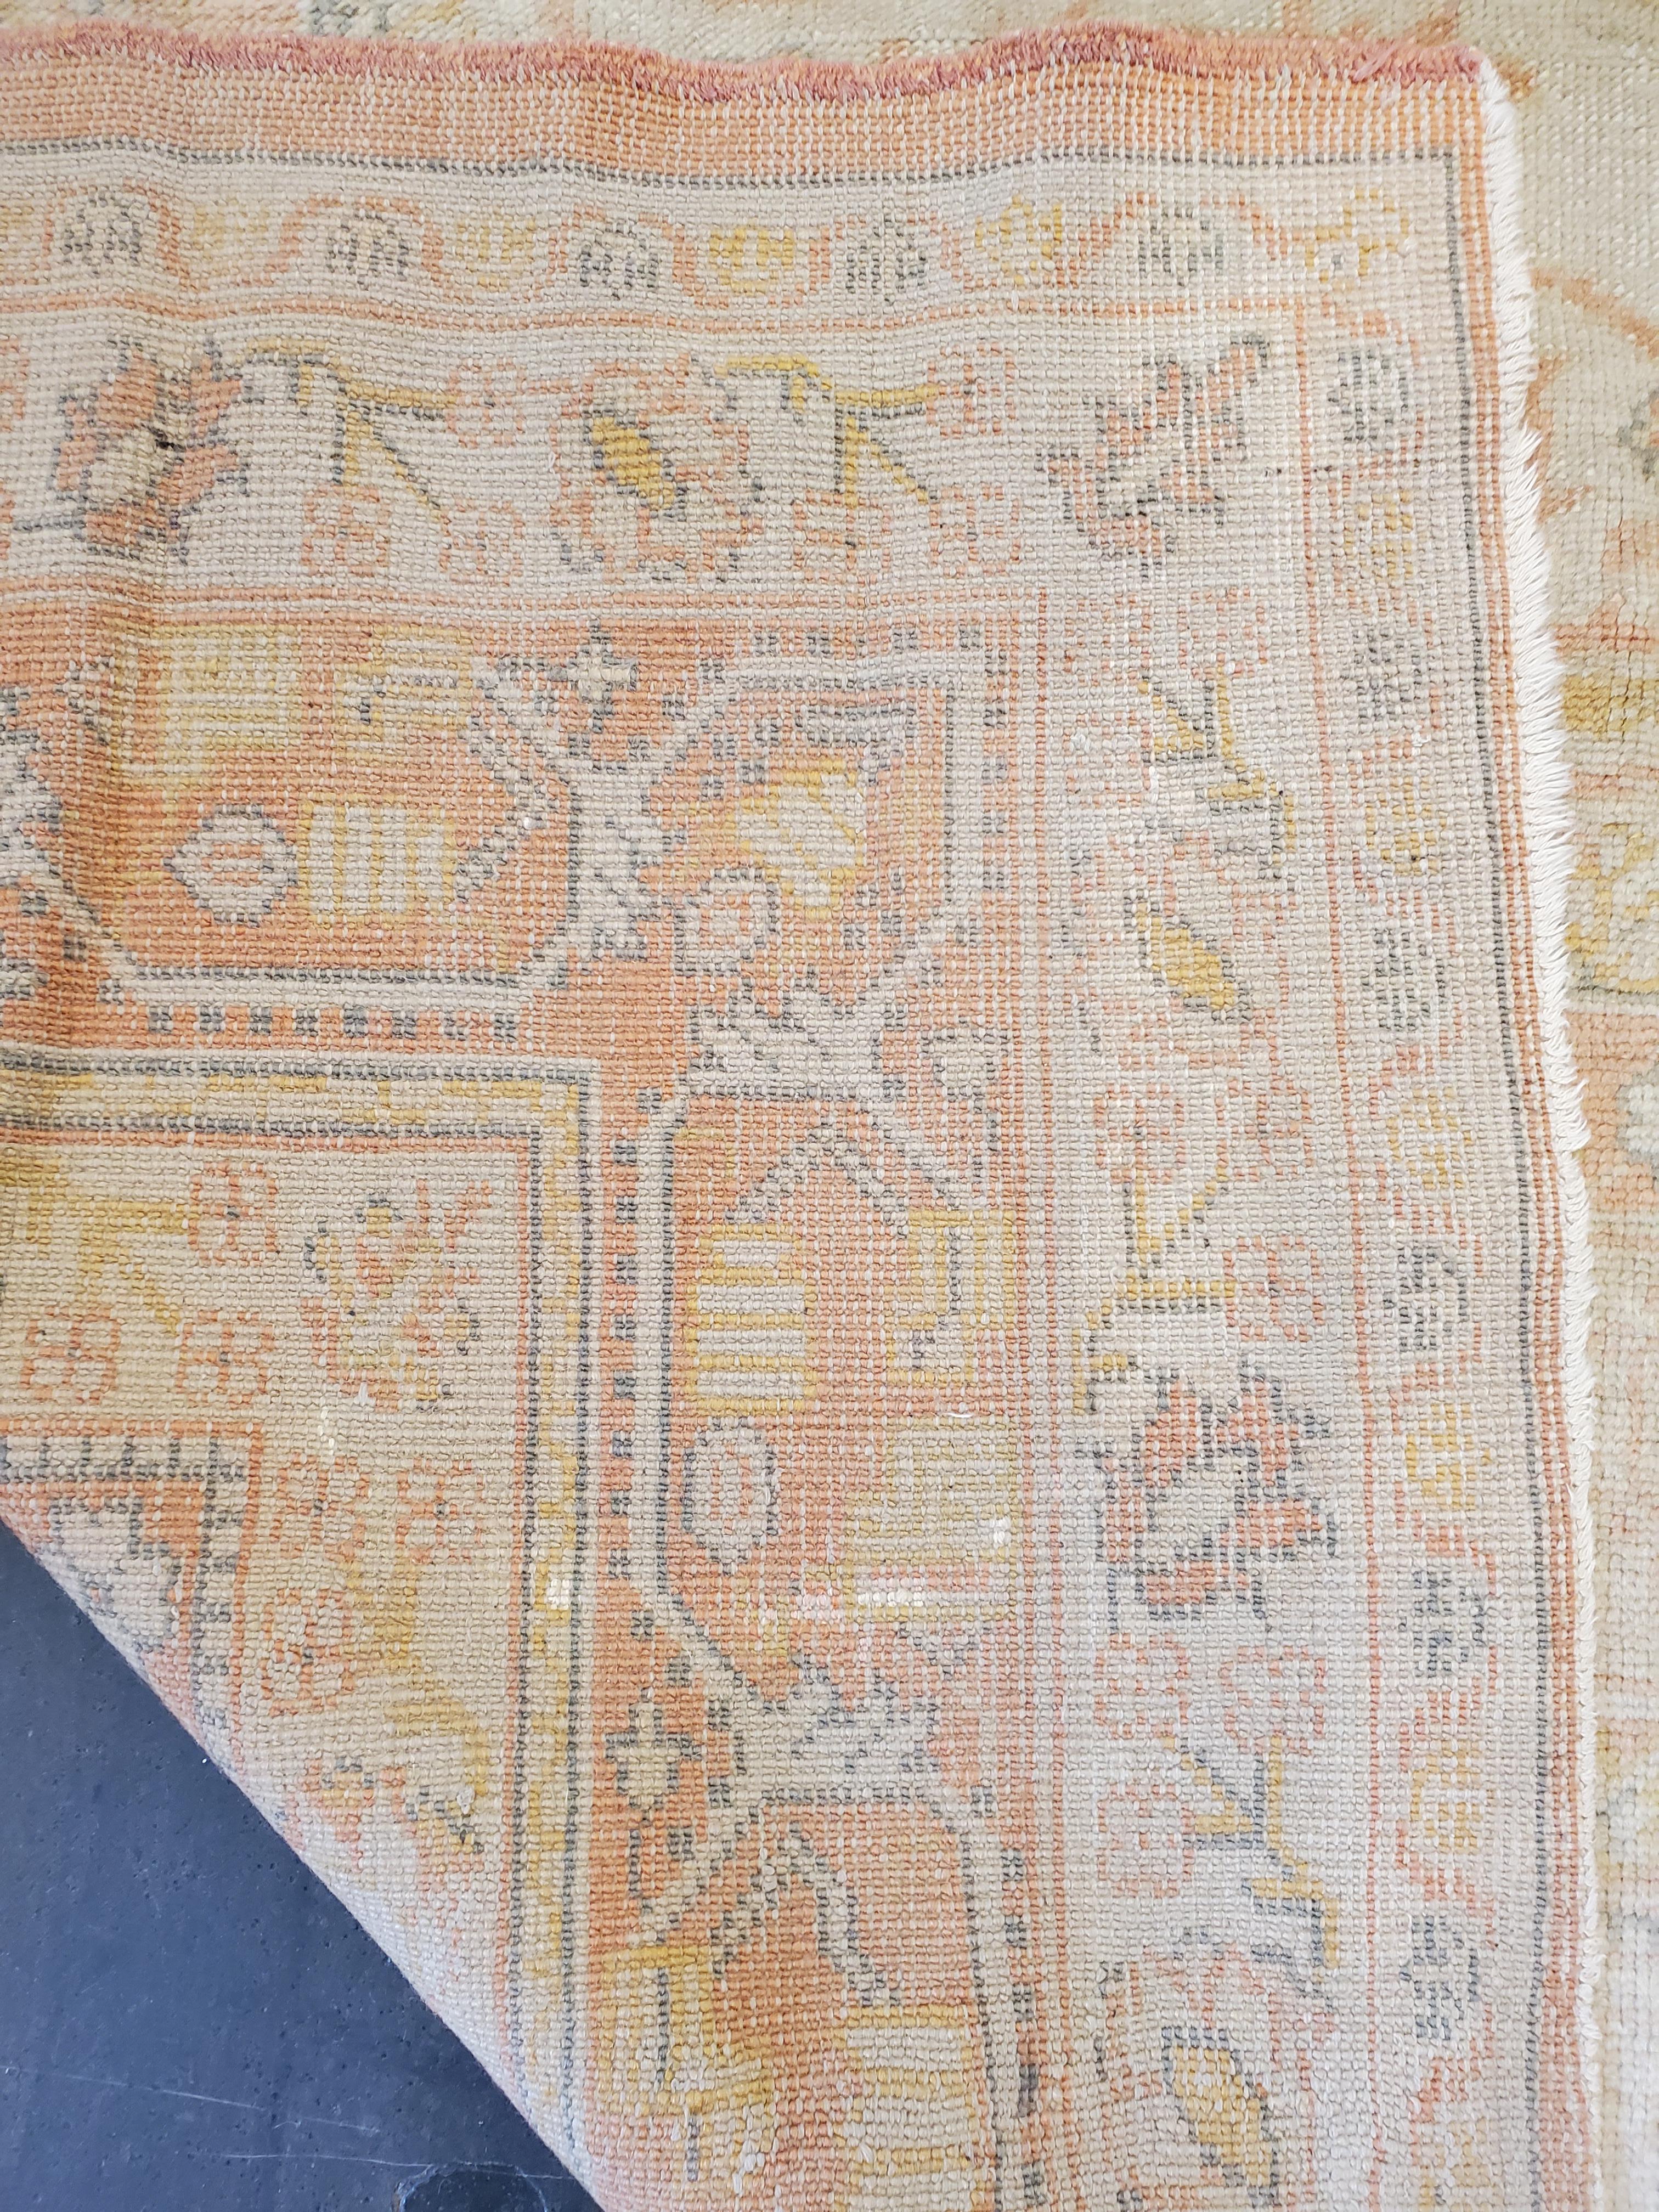 Antique Oushak Carpet, Turkish Rugs, Handmade Oriental Rugs, Pink Ivory Fine Rug For Sale 2